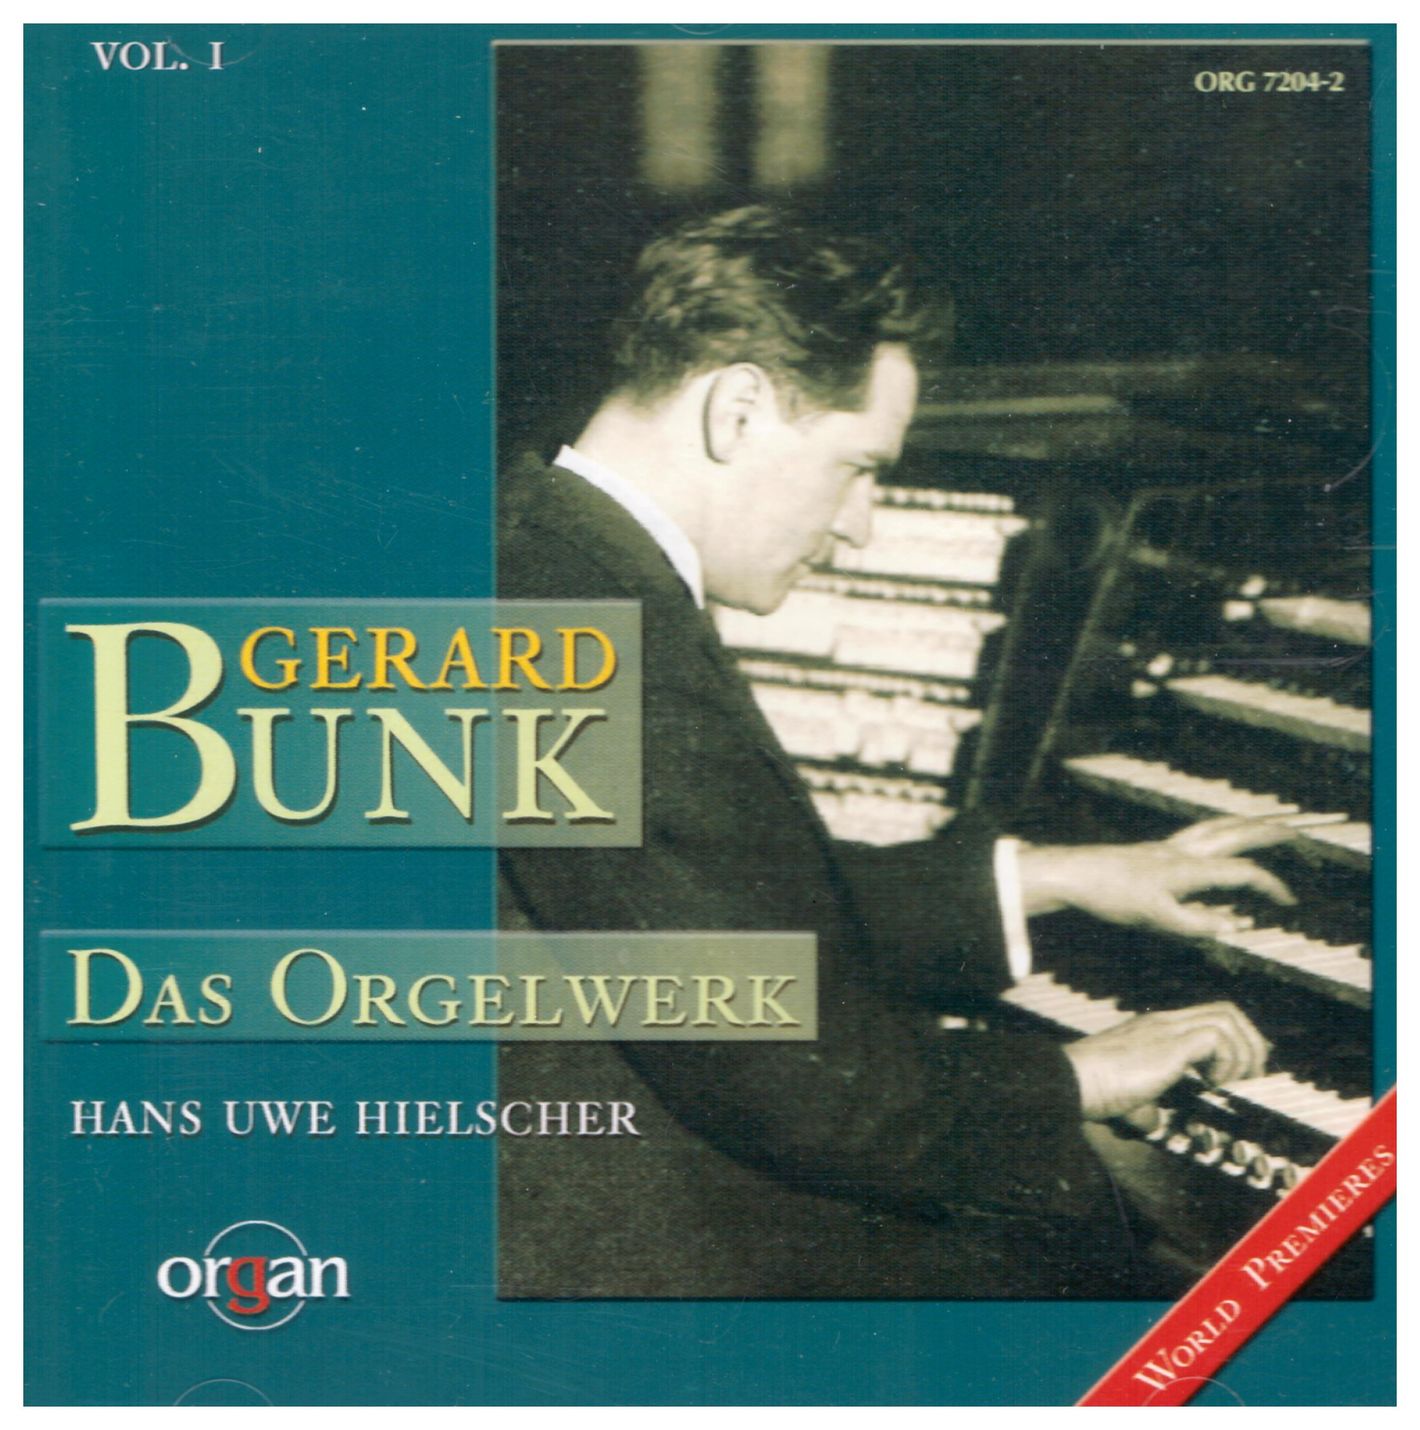 Gerard Bunk: Free Organ Works I